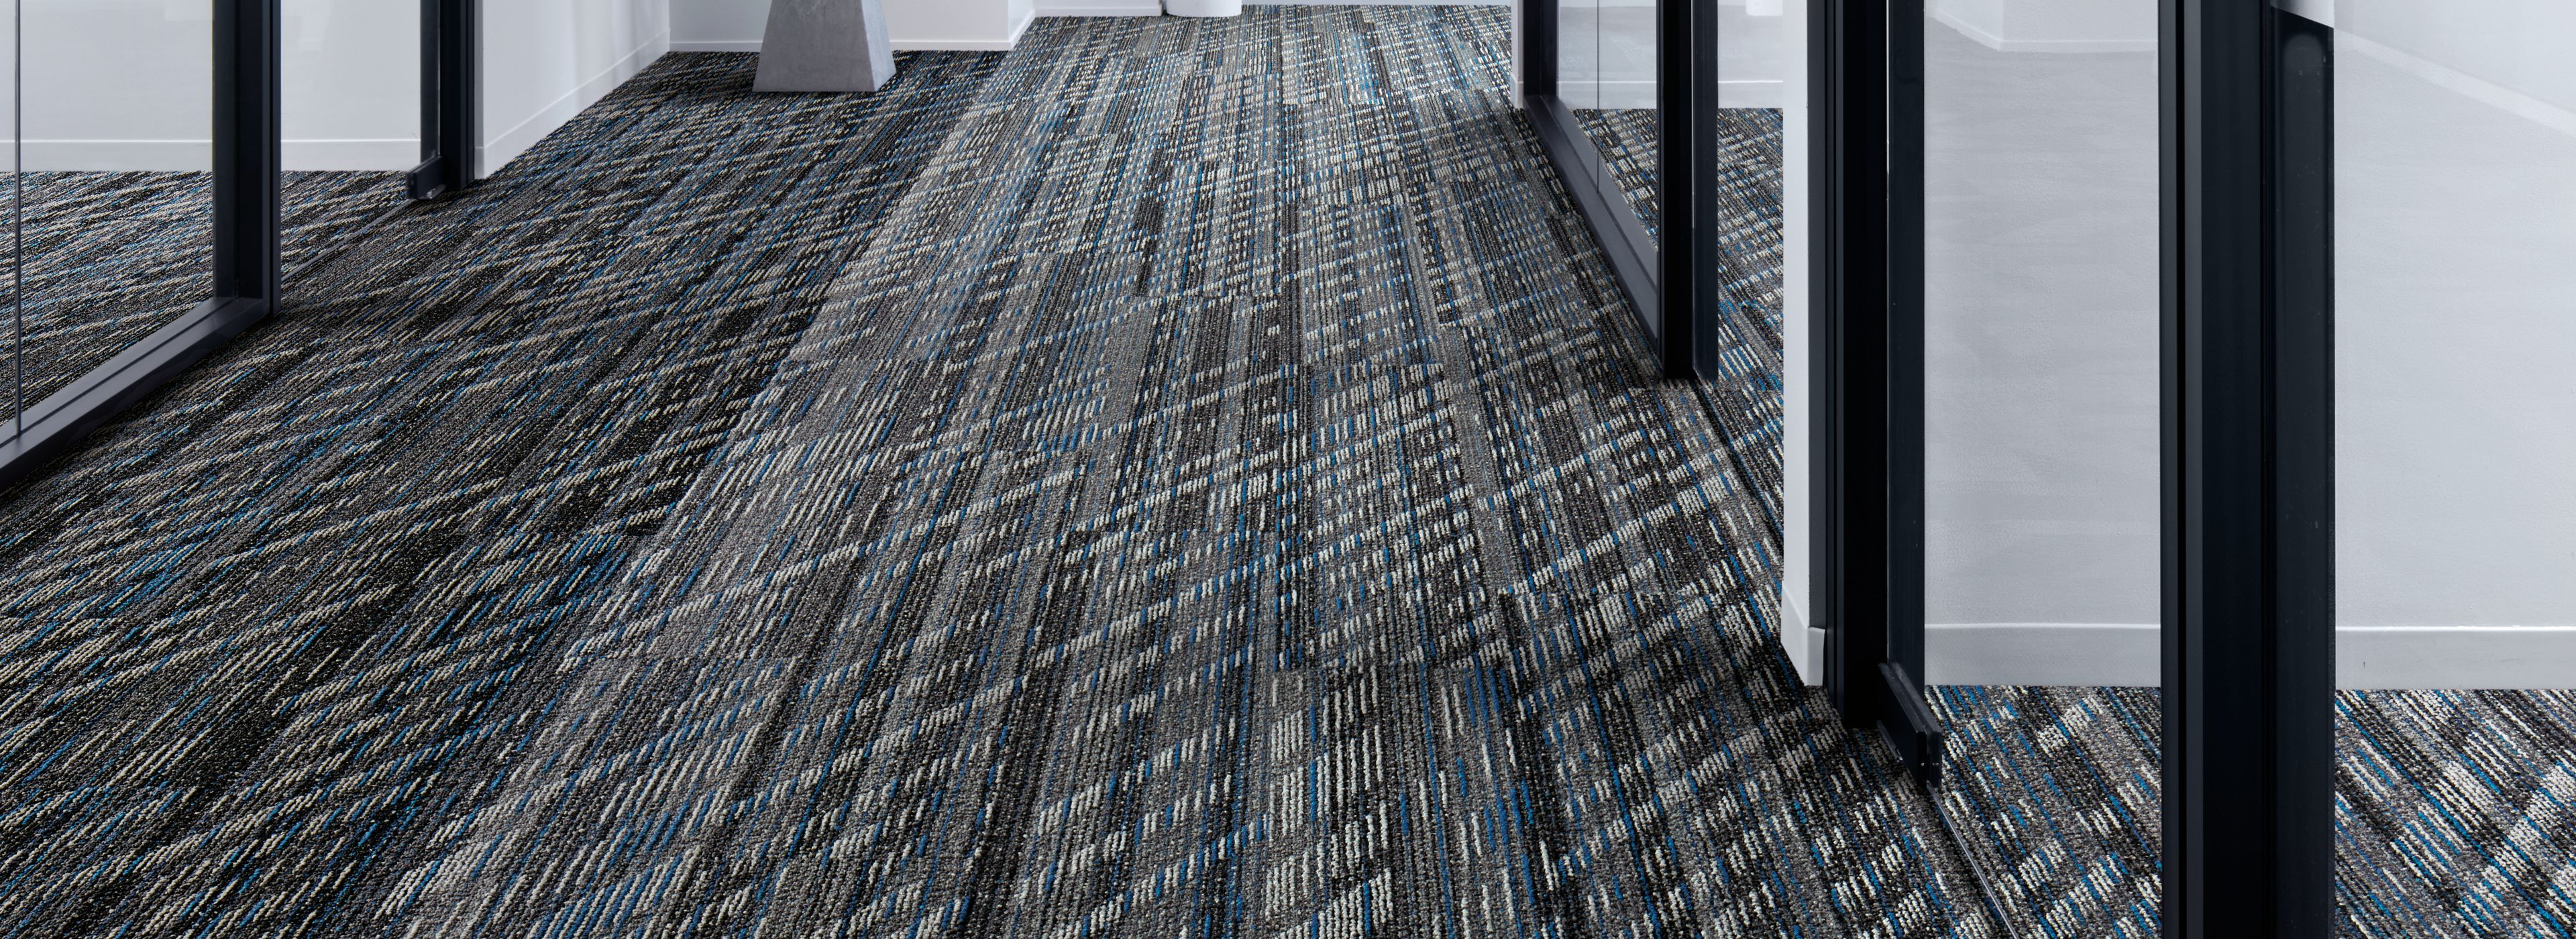 Interface Soft Glow plank carpet tile in office hallway numéro d’image 2